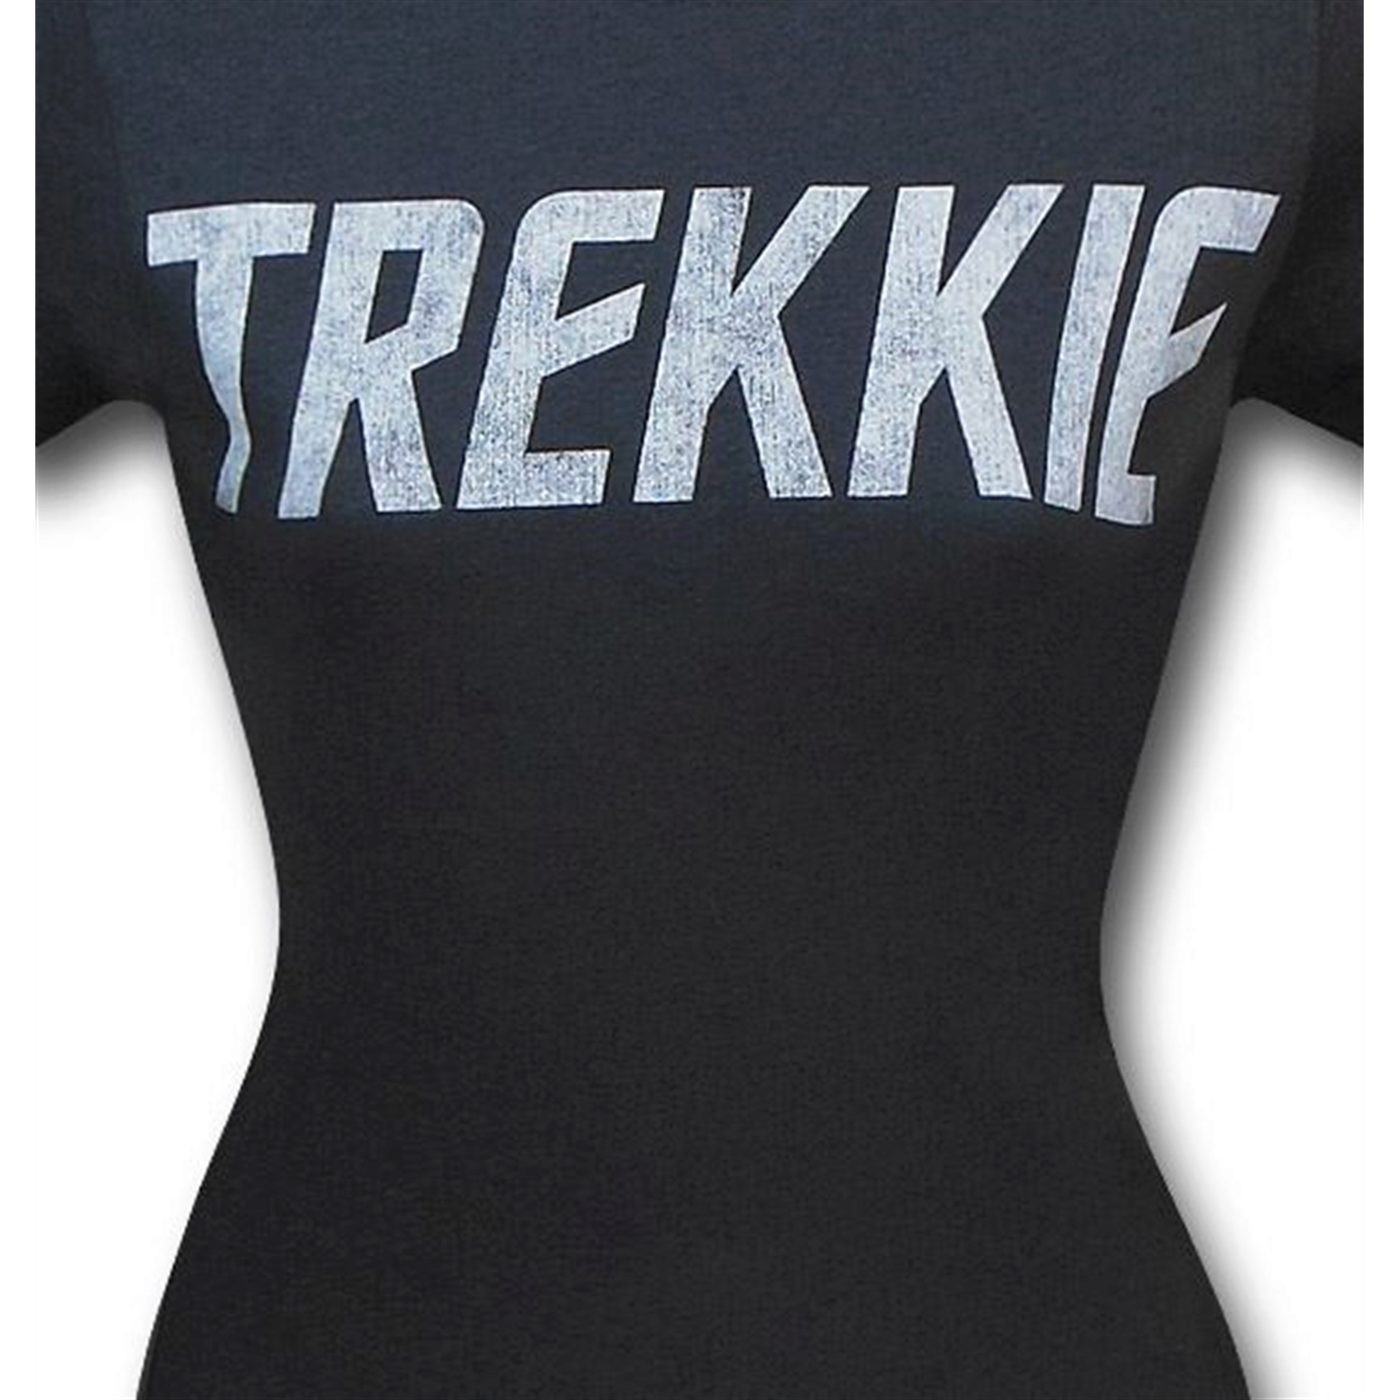 Star Trek Trekkie Women's T-Shirt